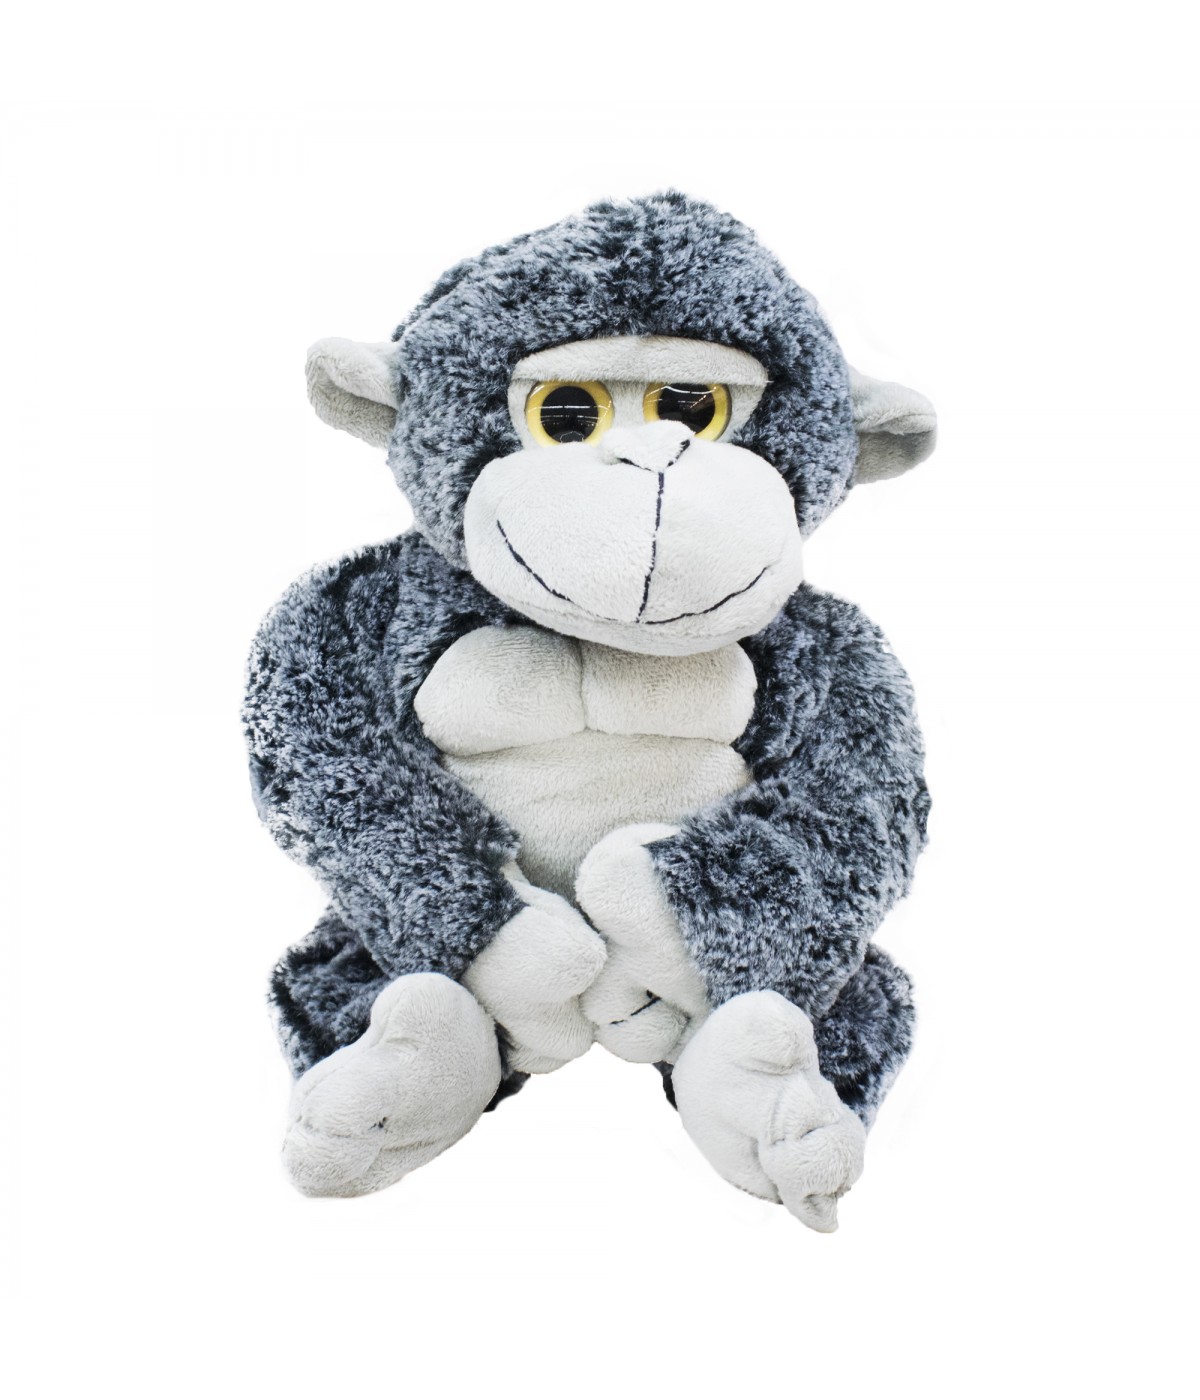 Gorila Pelucia Macaco Branco Sentado 25 Cm Macio Inmetro